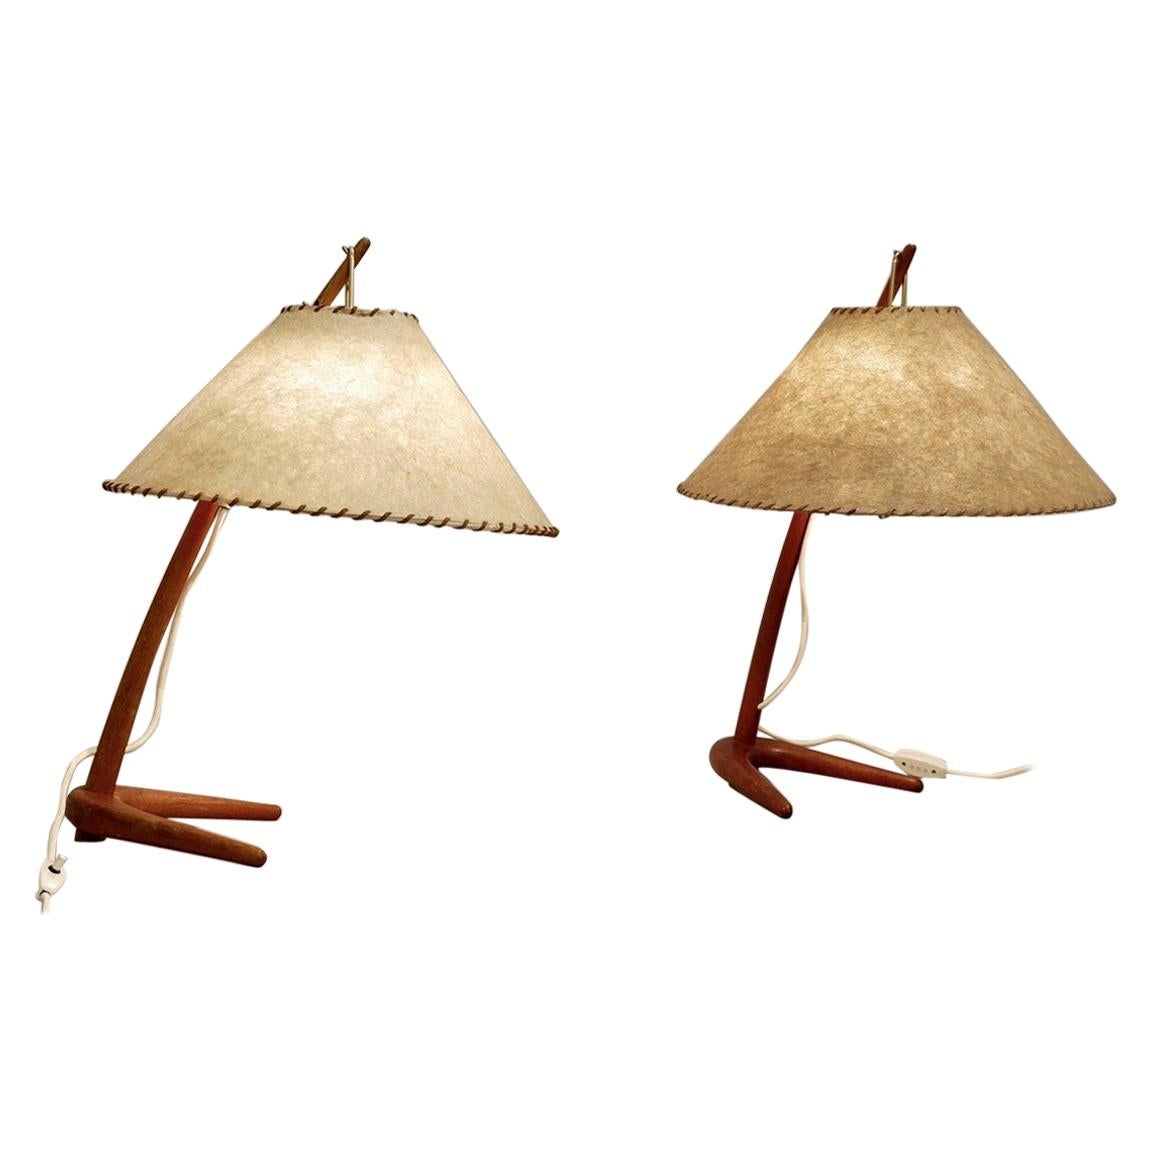 'Dornstab' Table Lamps by J.T. Kalmar for Kalmar Werkstatten, a Pair Available